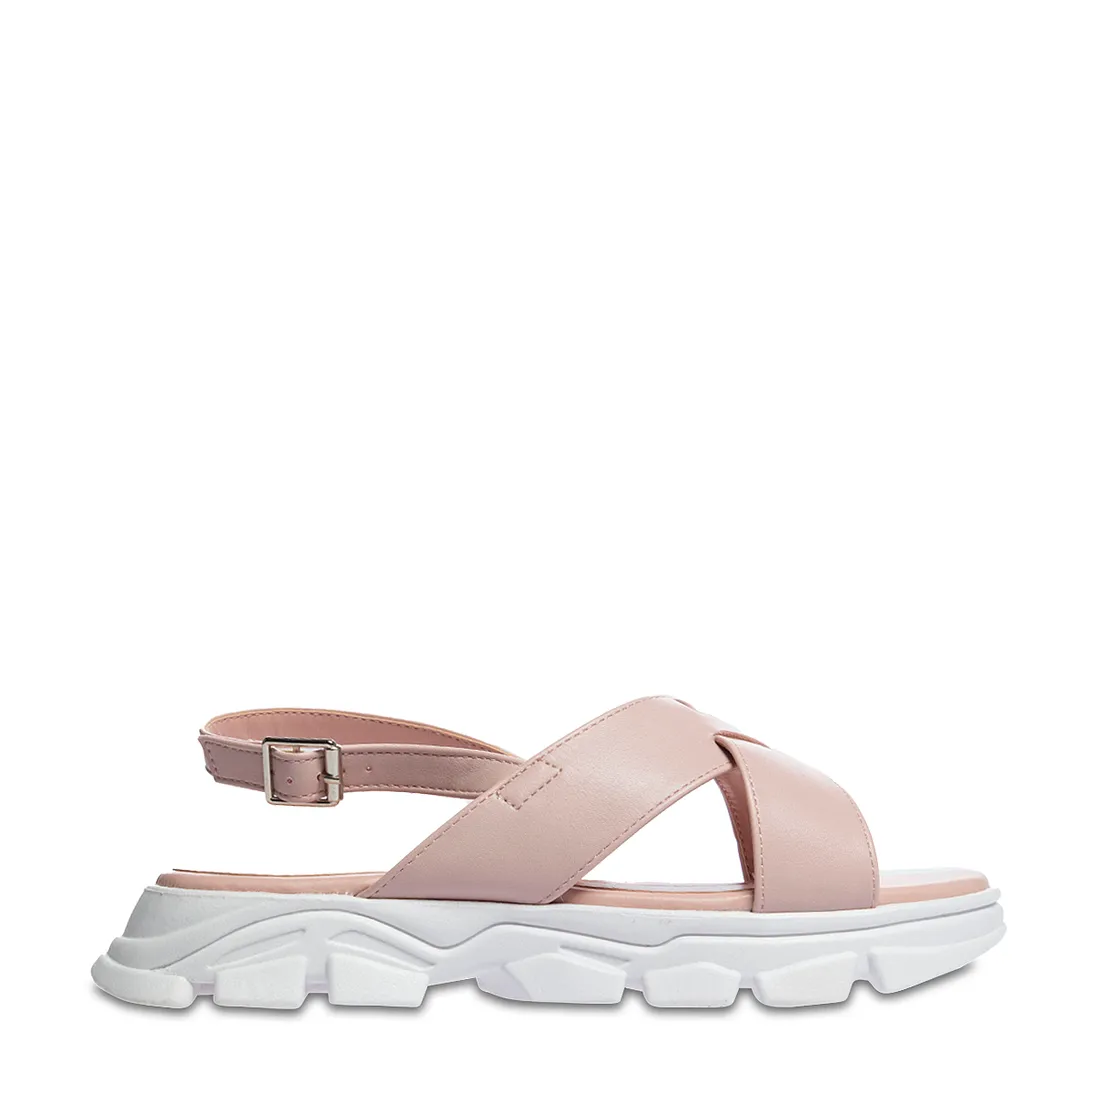 Chunky cross strap sandal pink - GIRLS 7-15 YEARS Shoes | Ackermans